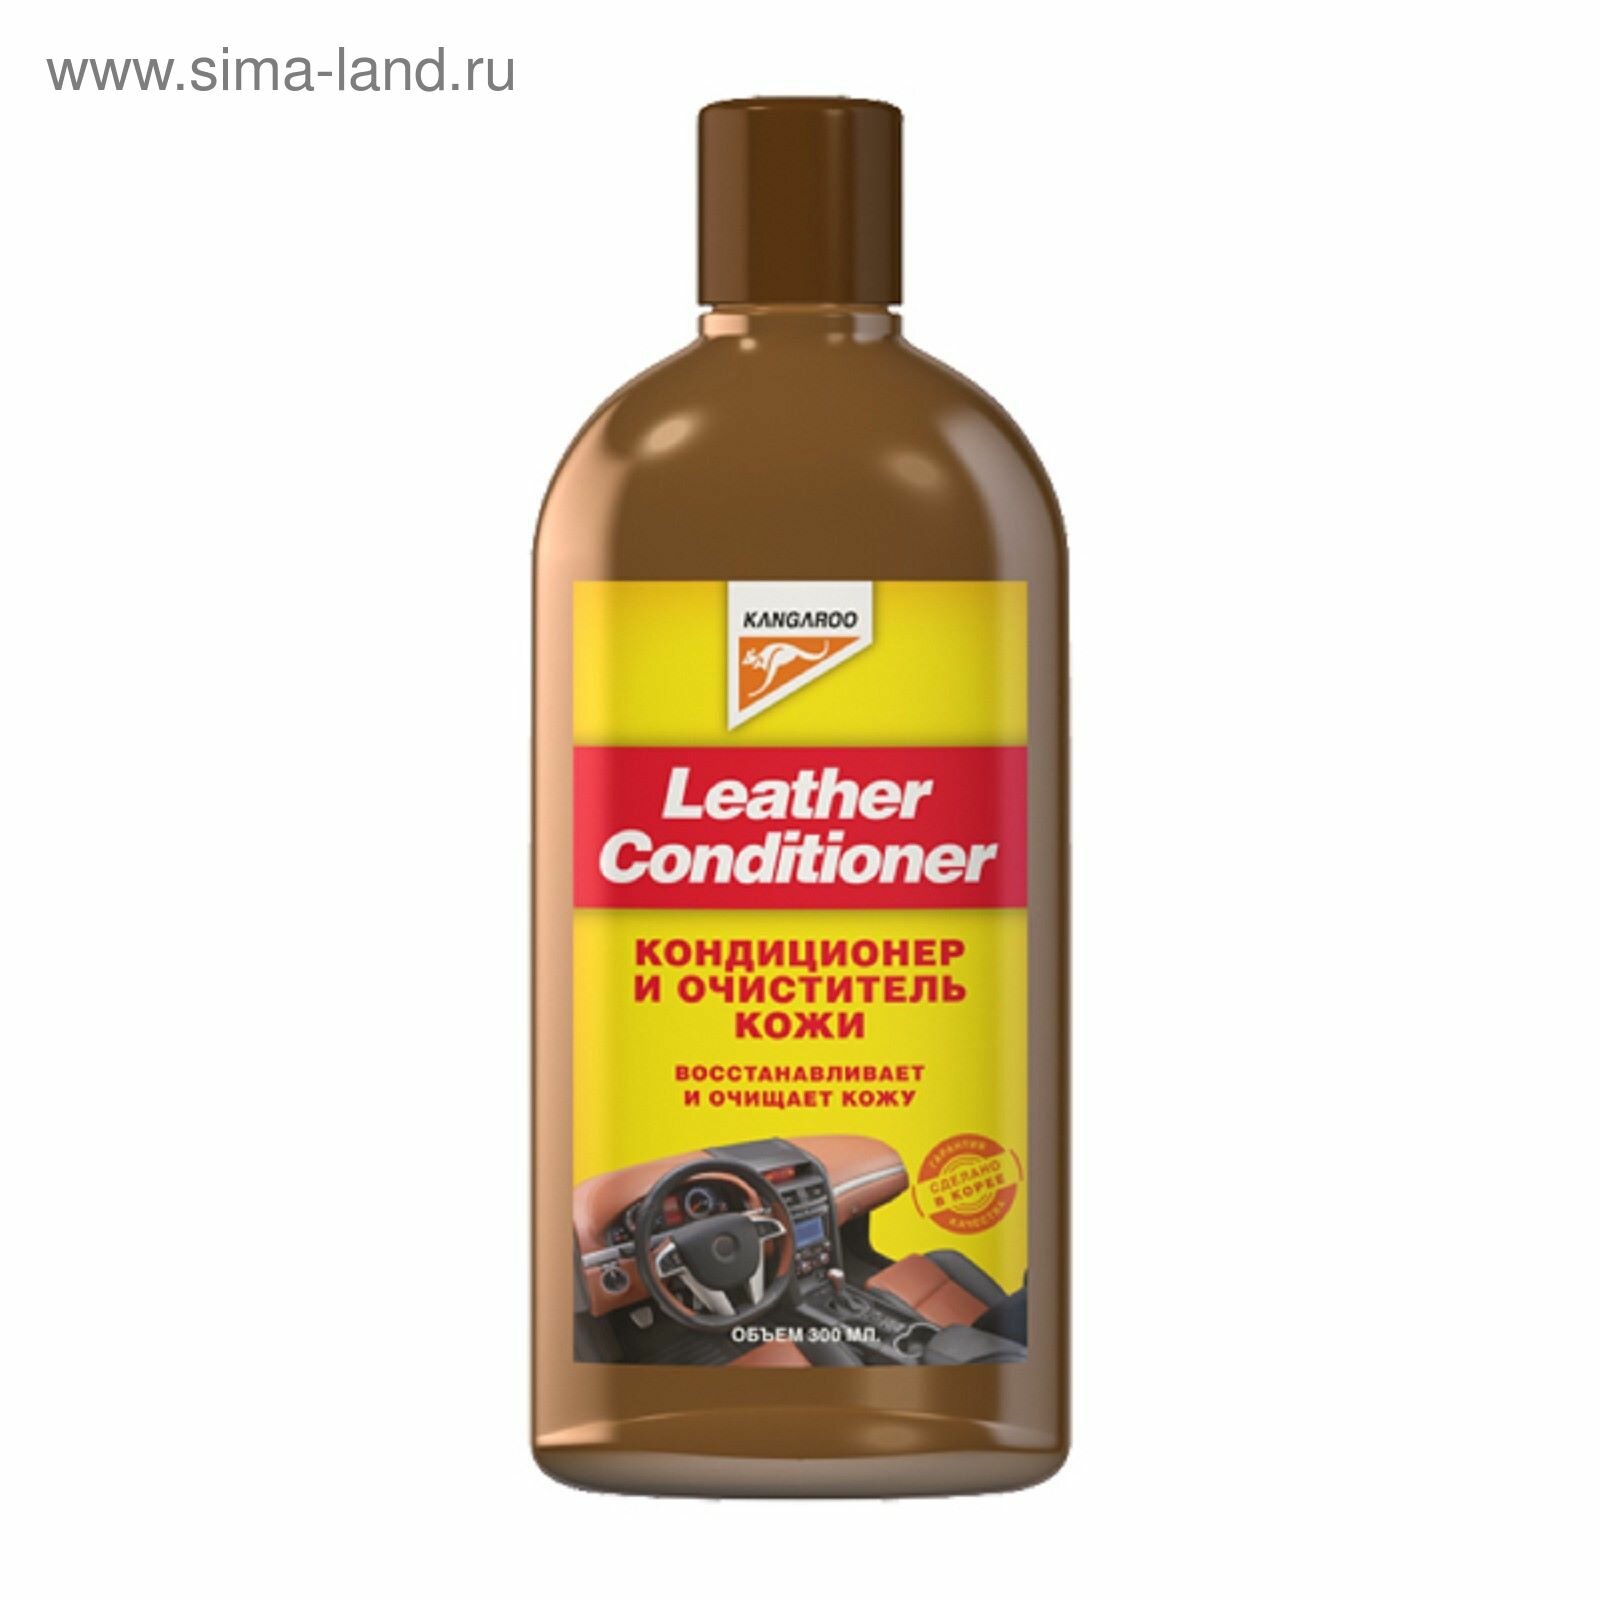 Кондиционер для кожи Leather Conditioner 300 мл